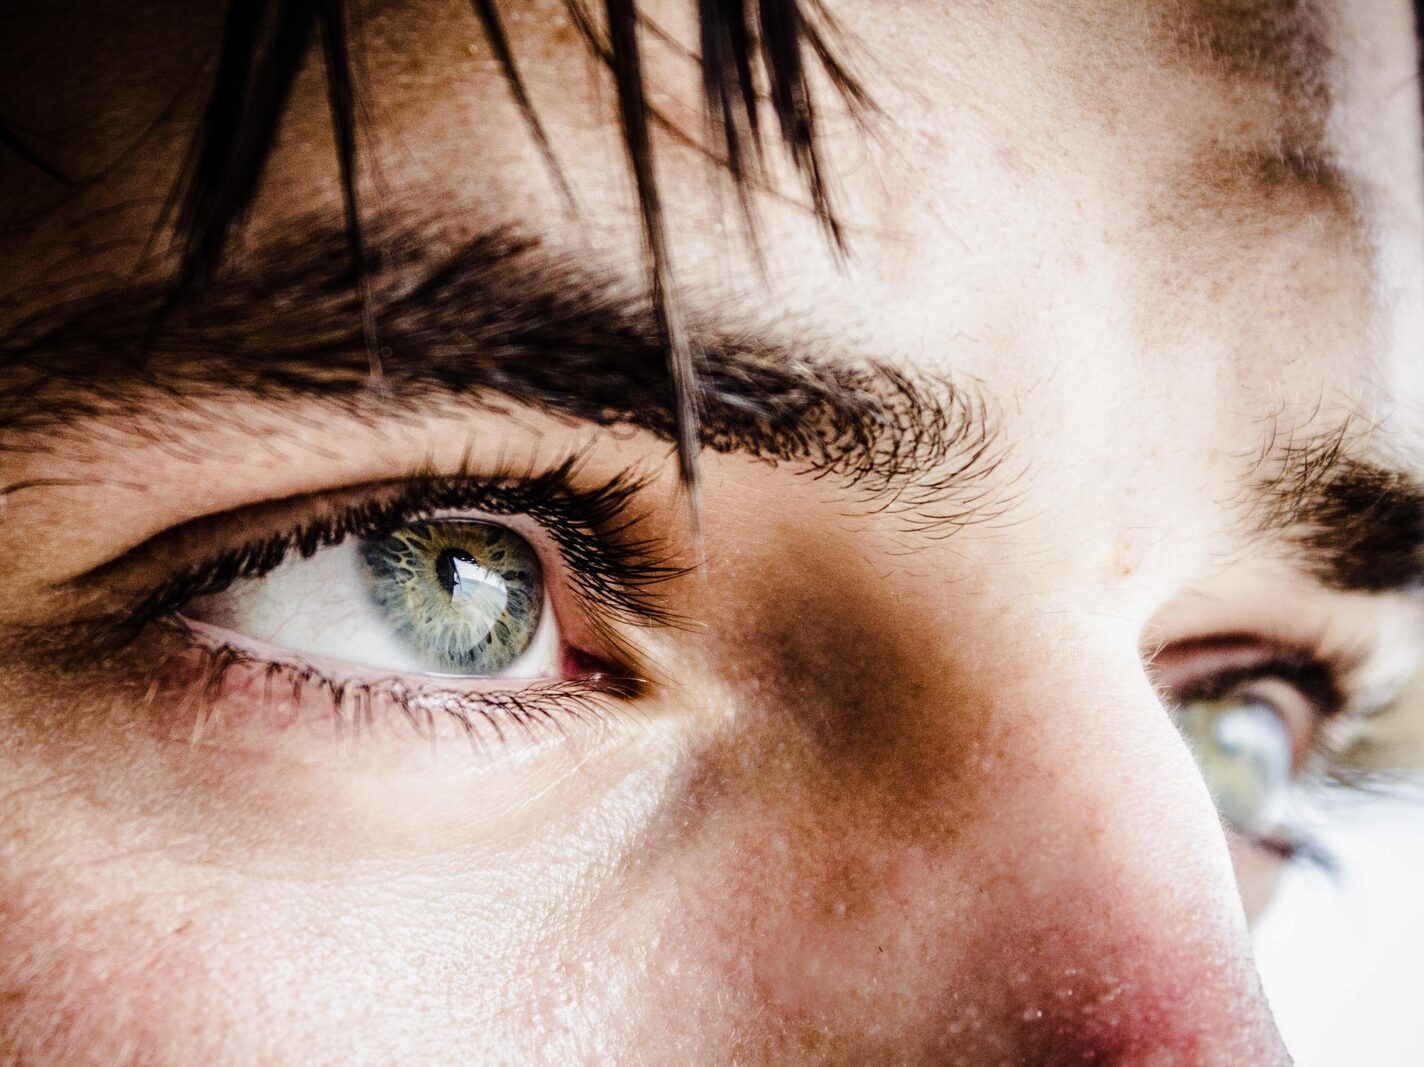 close up photo of gray-eyed man